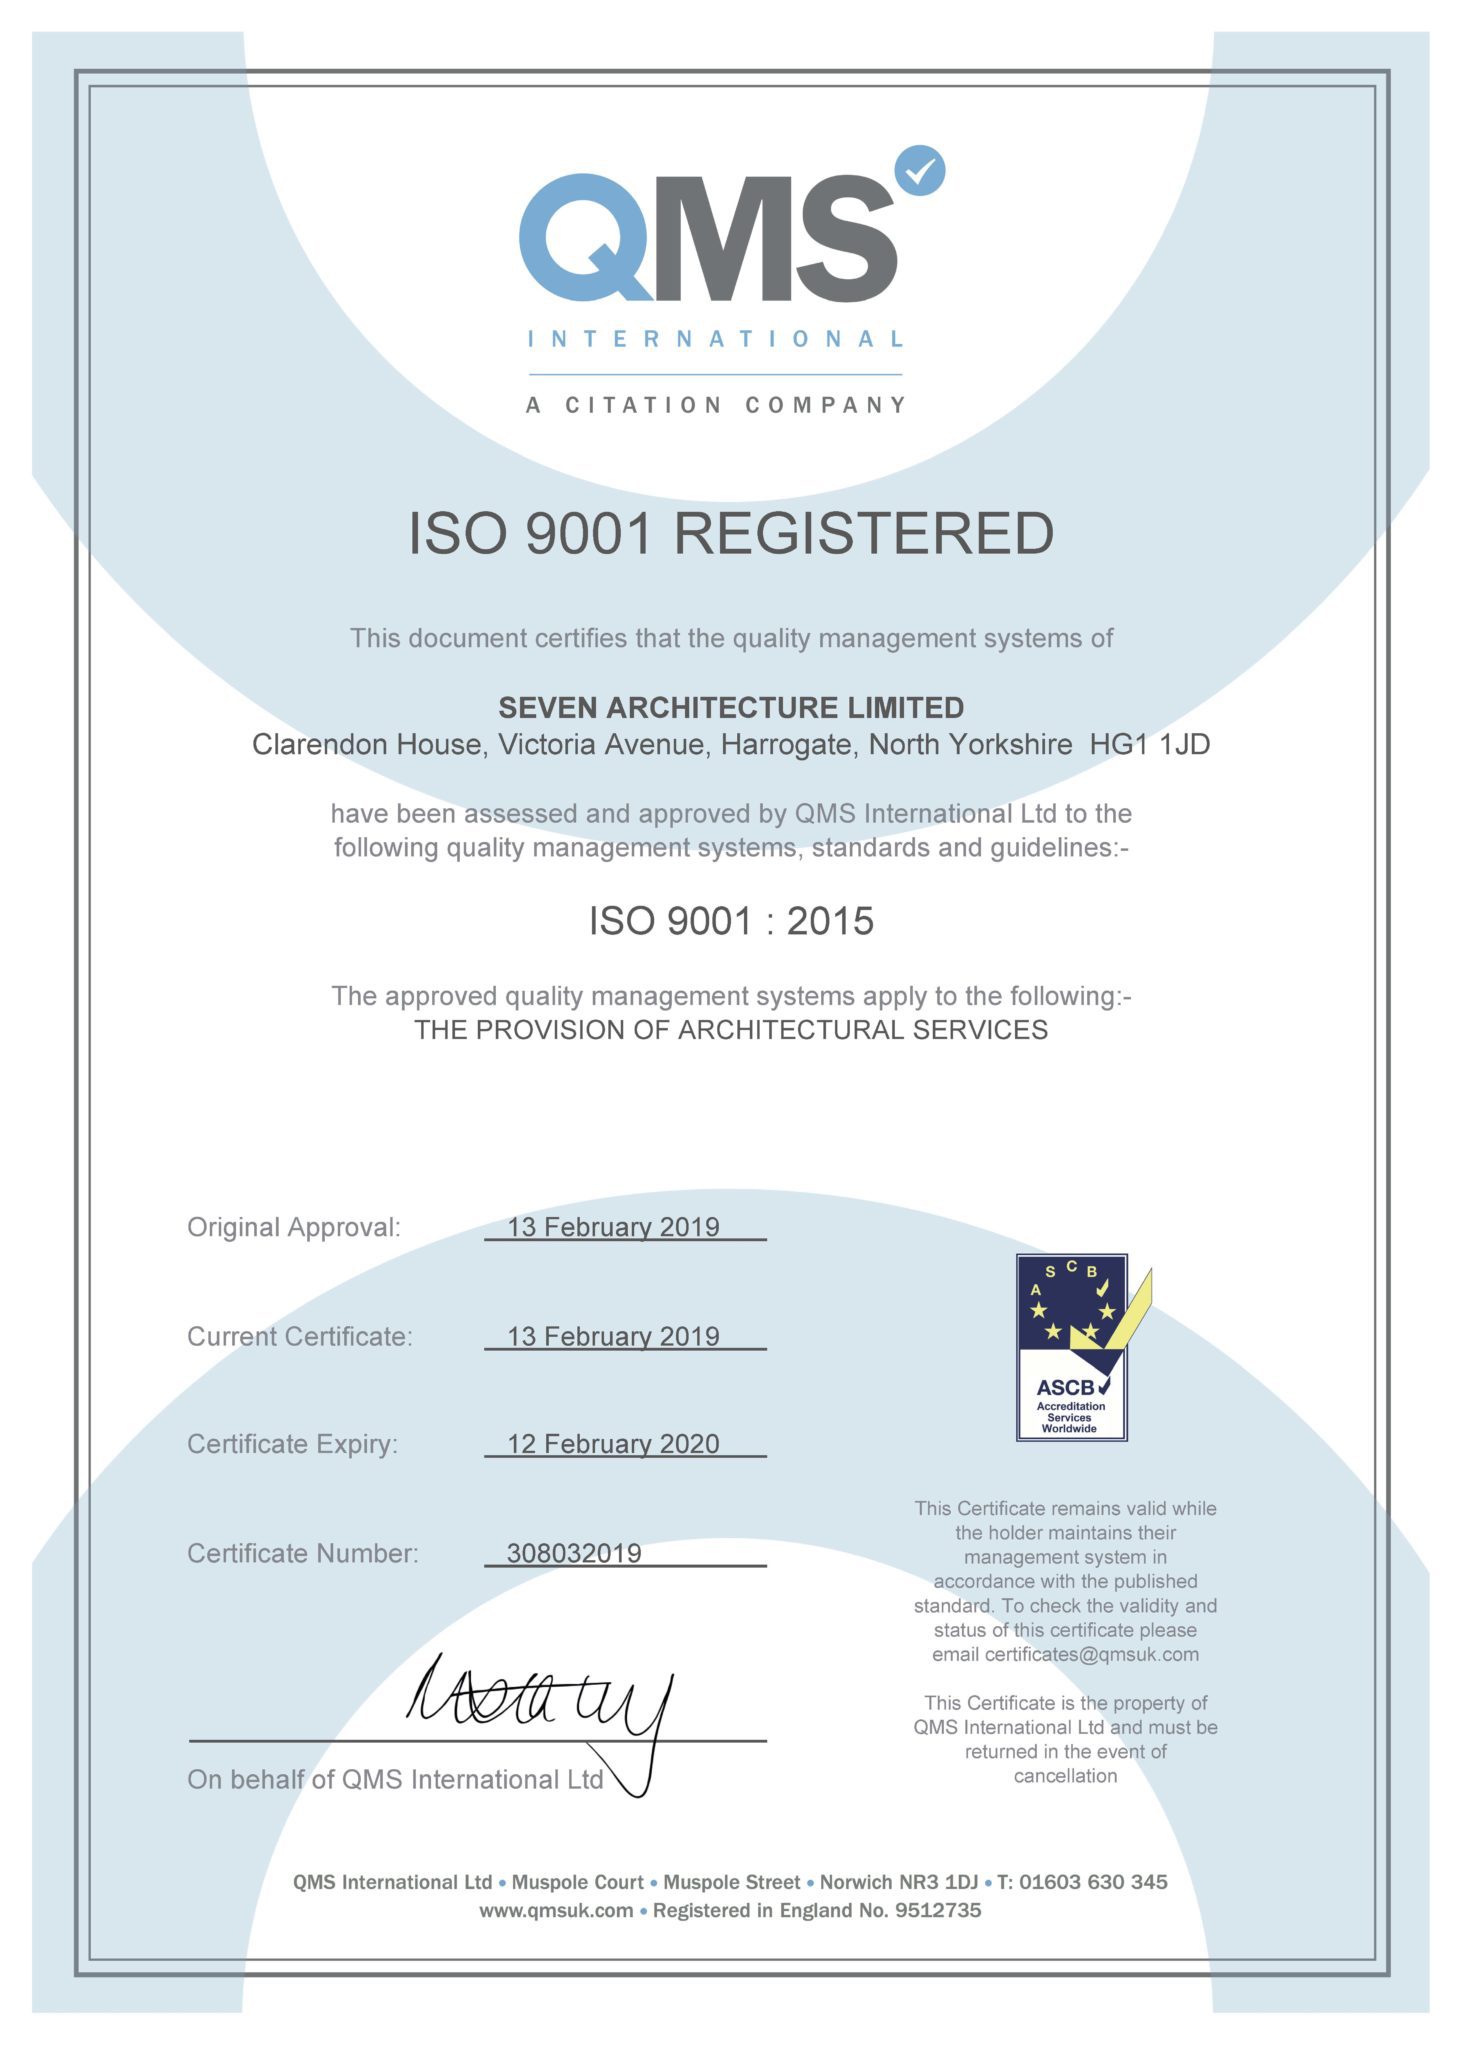 ISO 9001 Accreditation